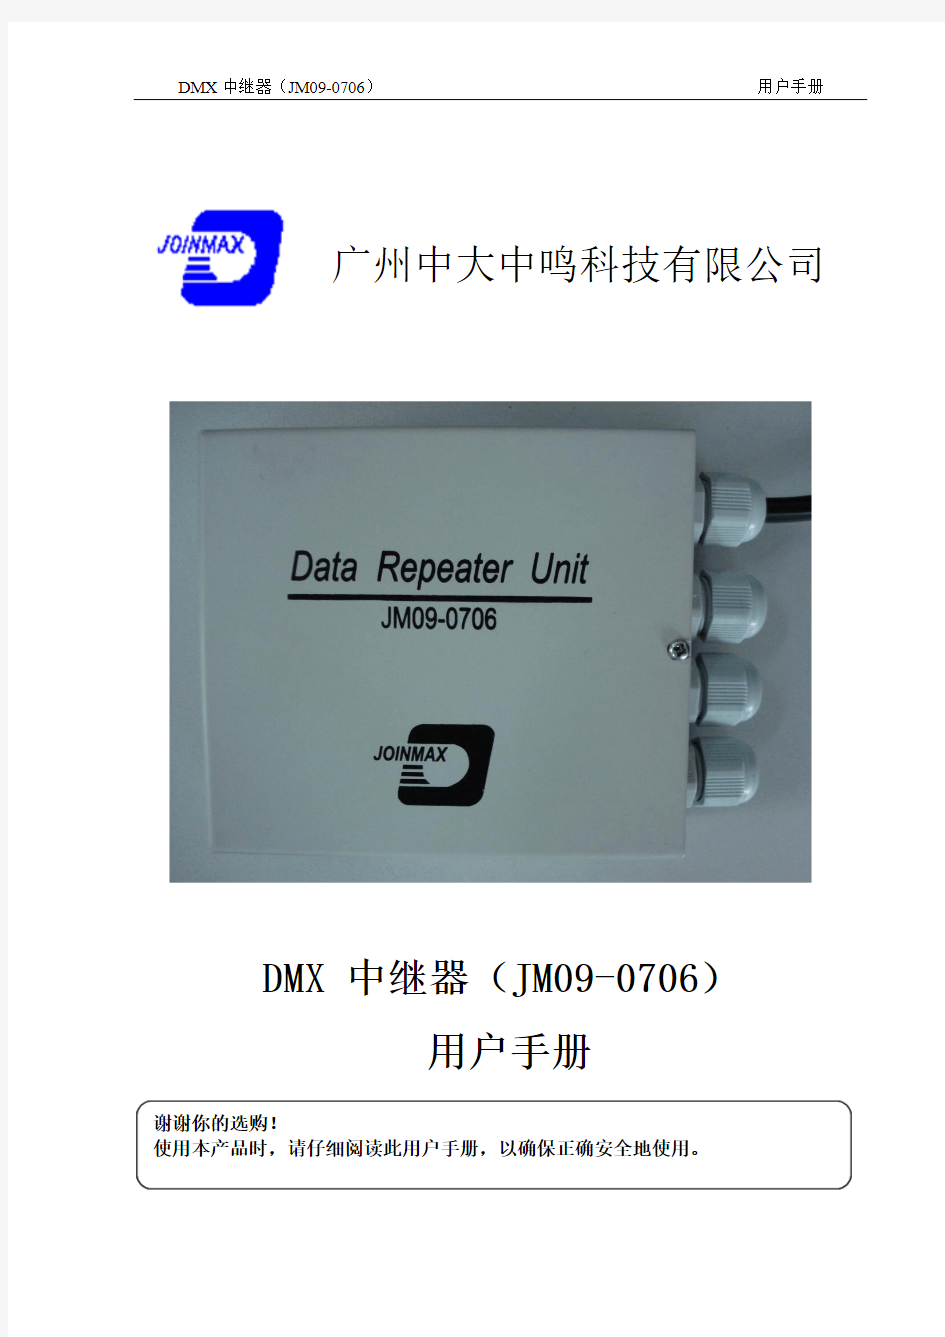 DMX512中继器产品说明书